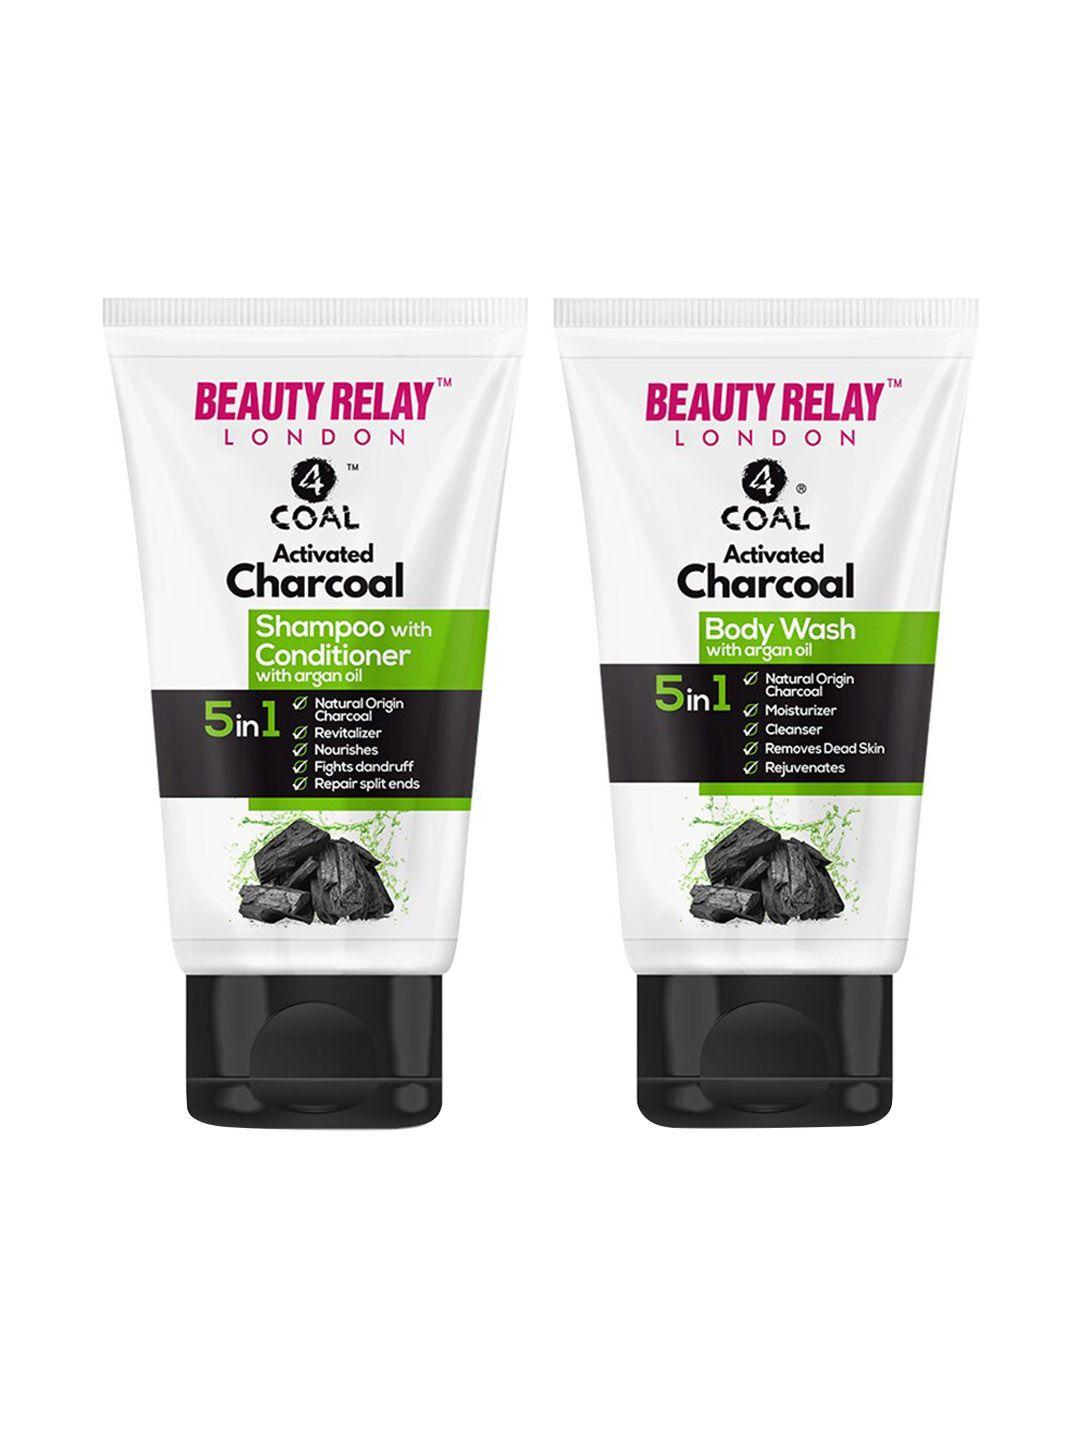 beautyrelay london 4coal argan oil shampoo with conditioner & body wash - buy 1 get 1 free